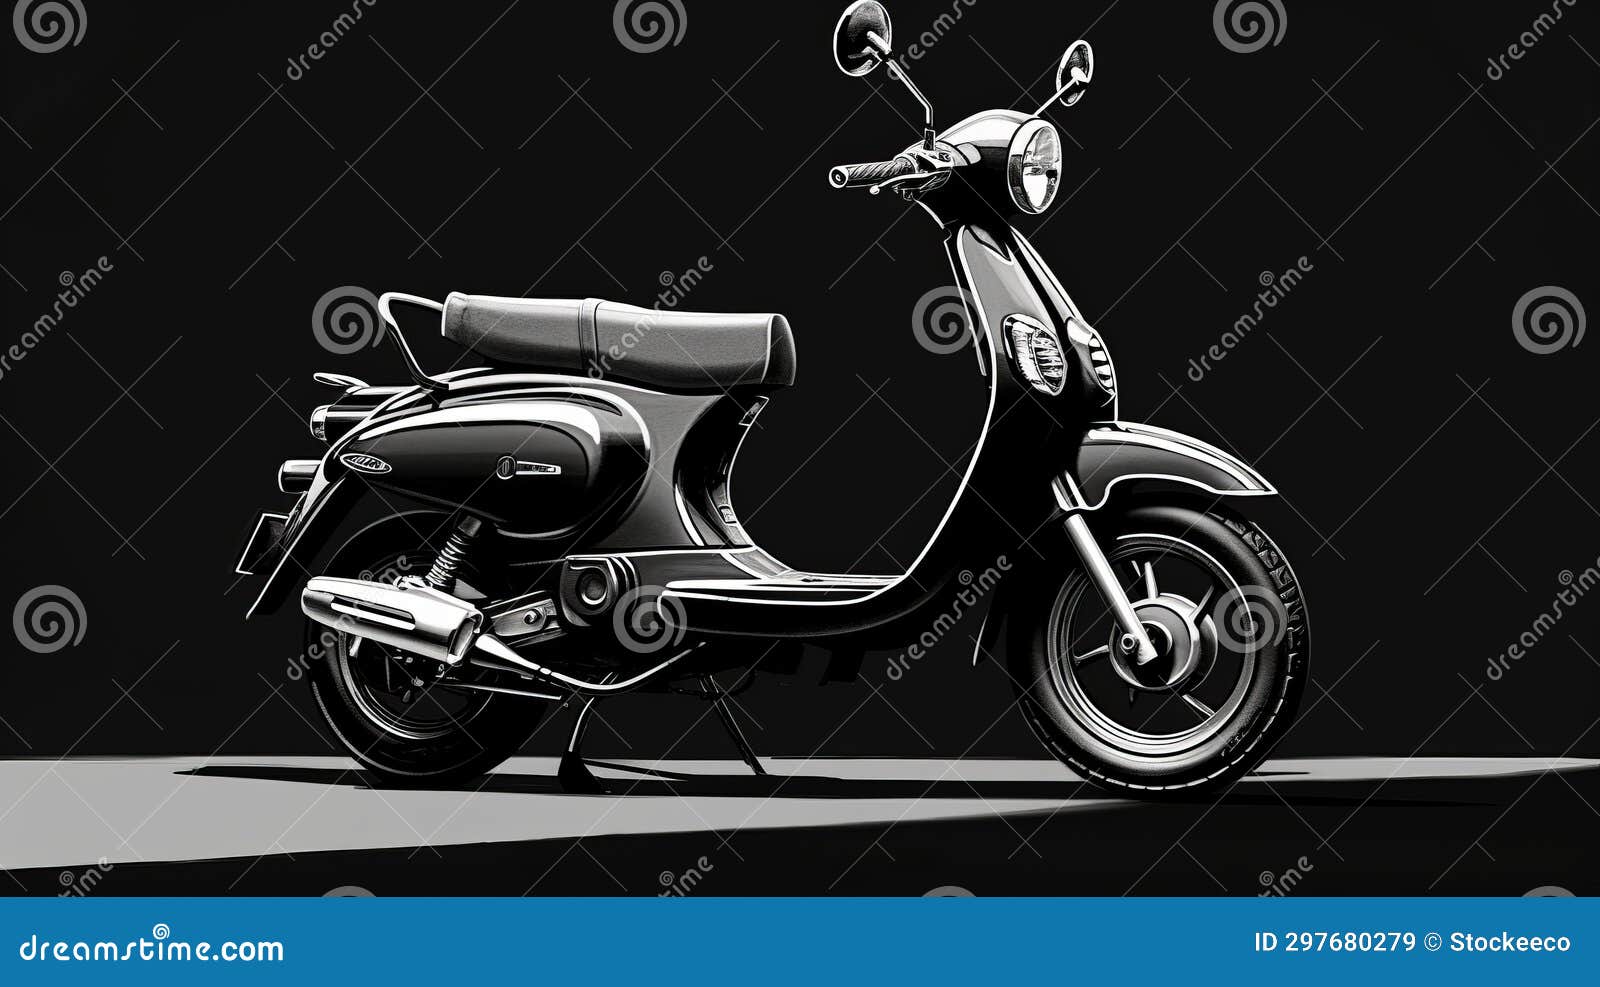 distinct stylistic range: black and white moped 